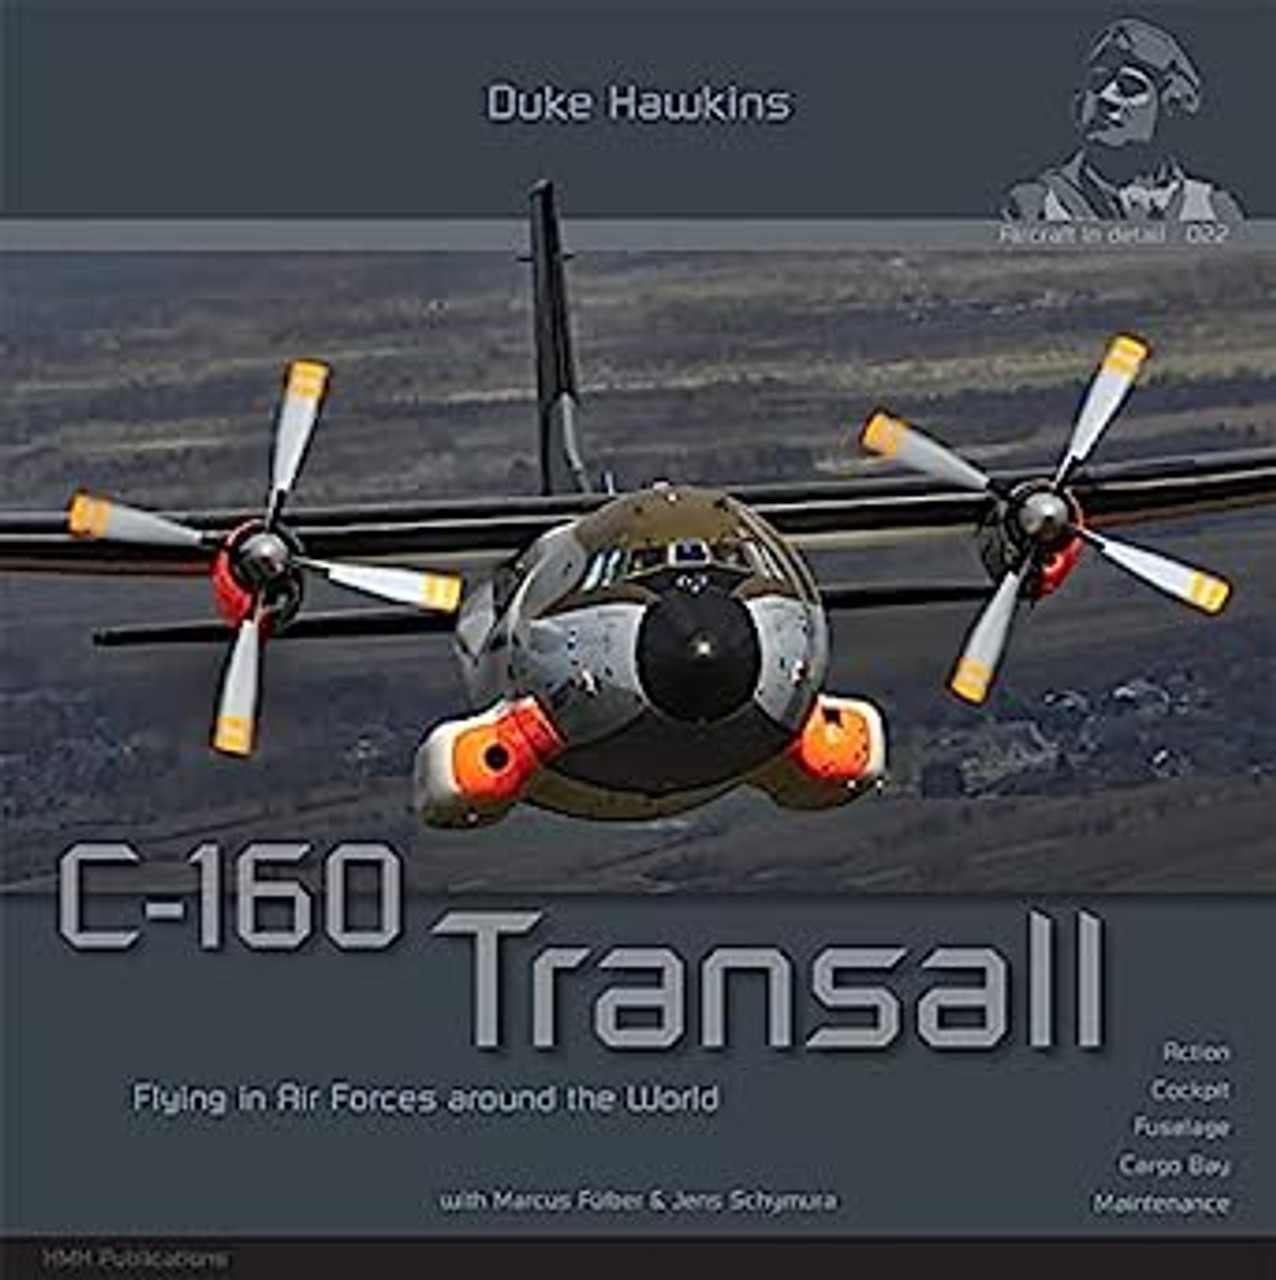 Aircraft in Detail 022: C-160 Transall